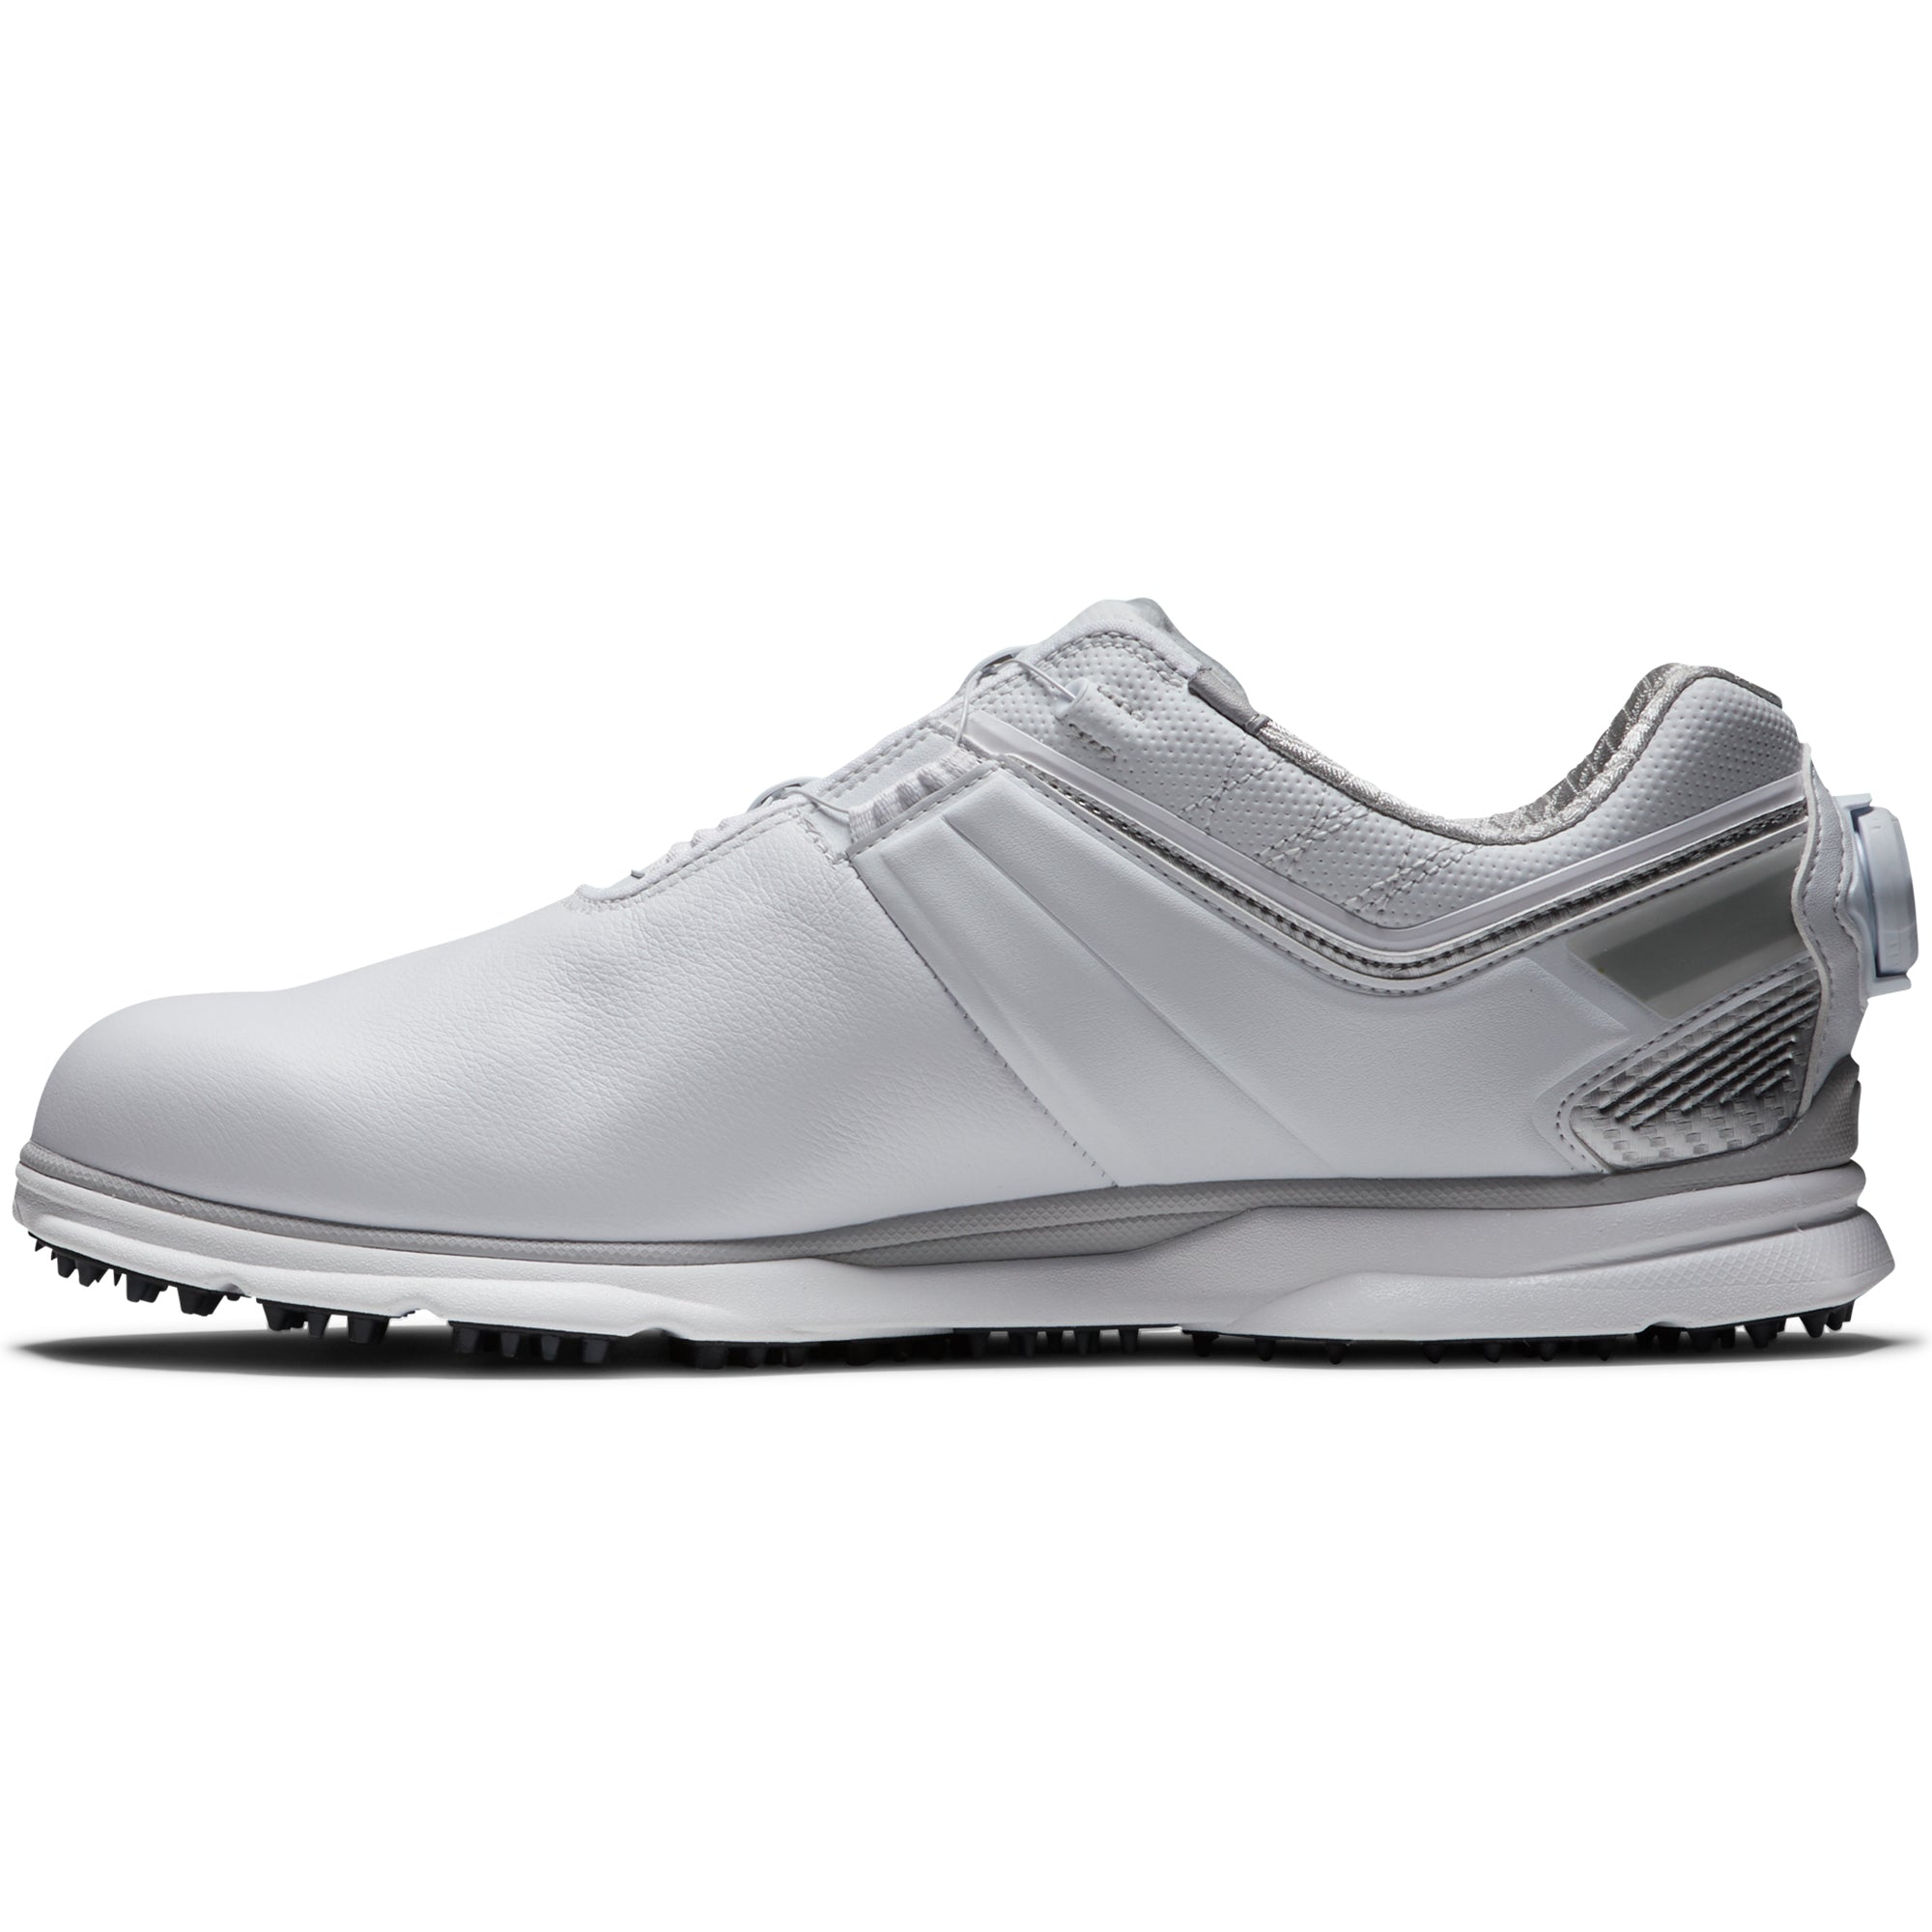 footjoy-pro-sl-carbon-boa-golf-shoes-53085-white-silver